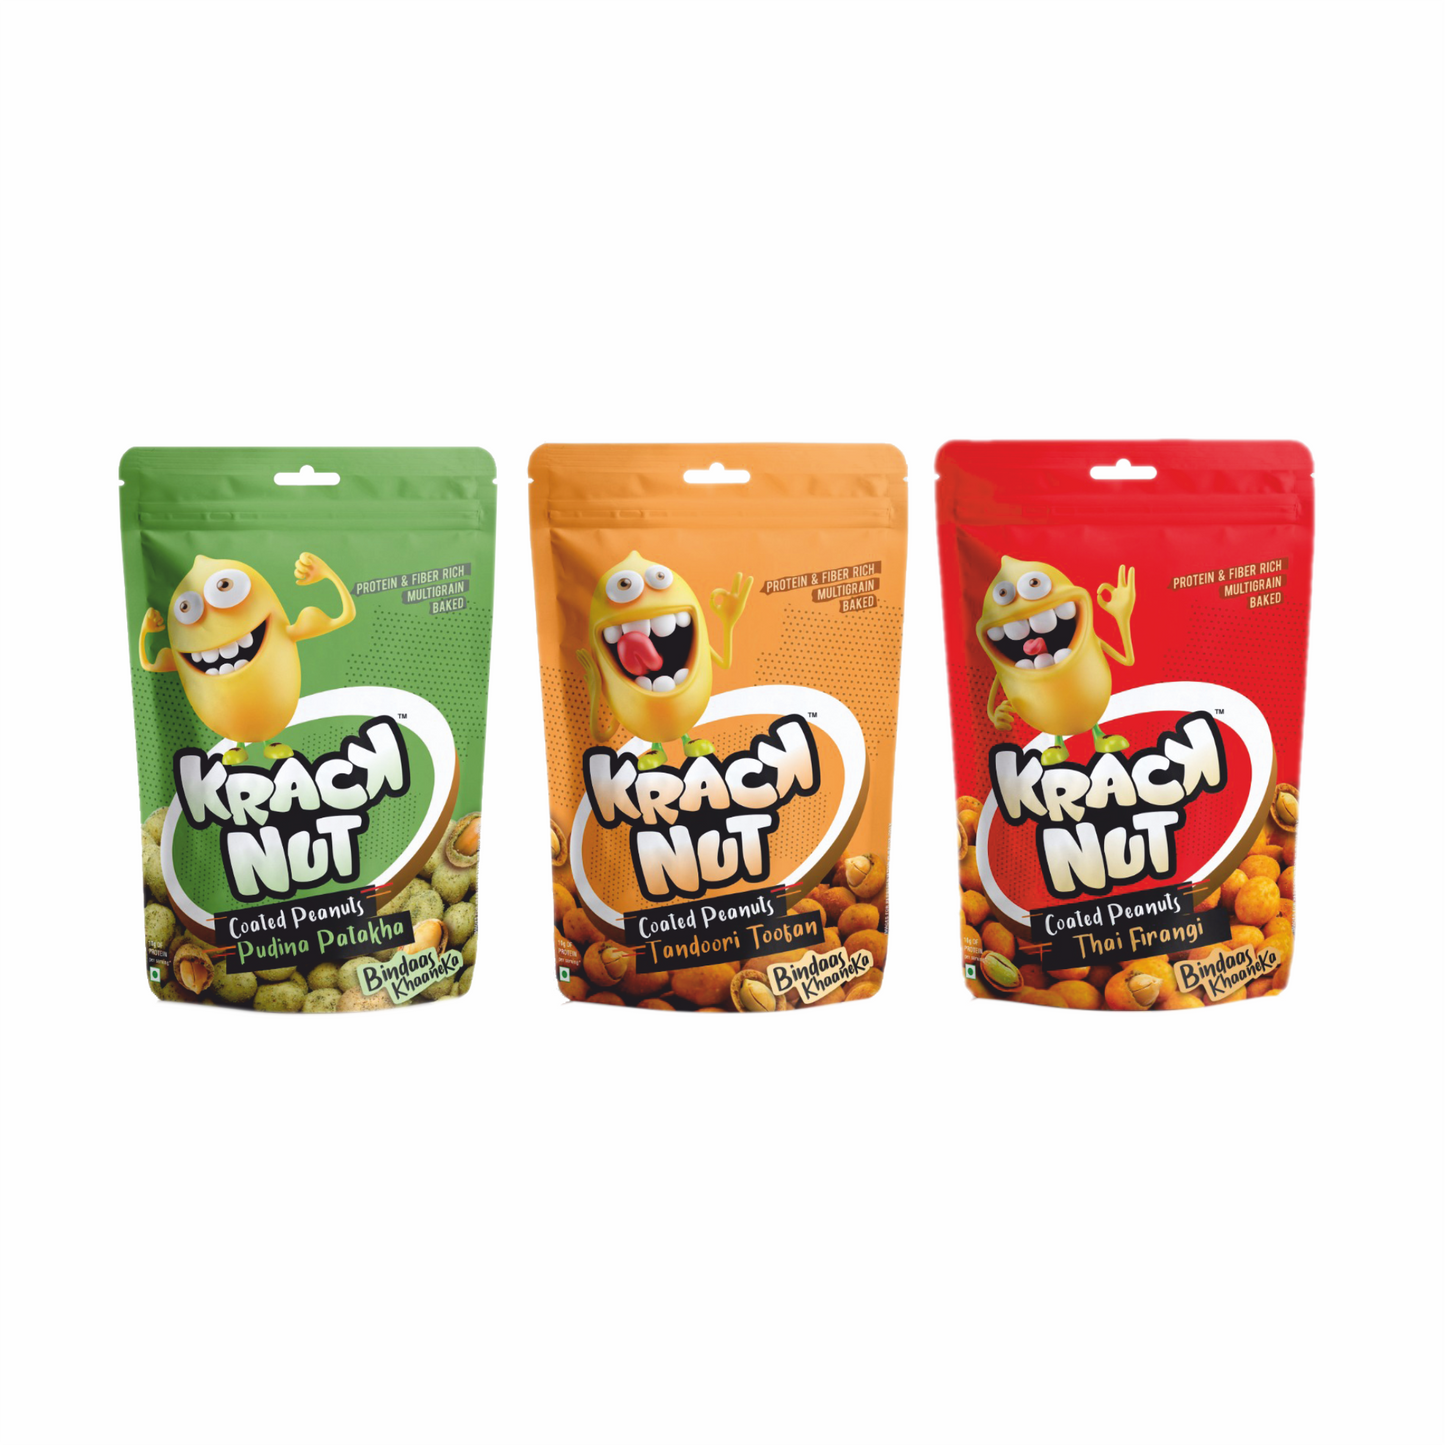 Kracknut Baked Coated Peanuts - Pack of 3 (100g x 3N) | Flavored crunchy coated peanuts | Healthy baked Indian Snack | Vegan |